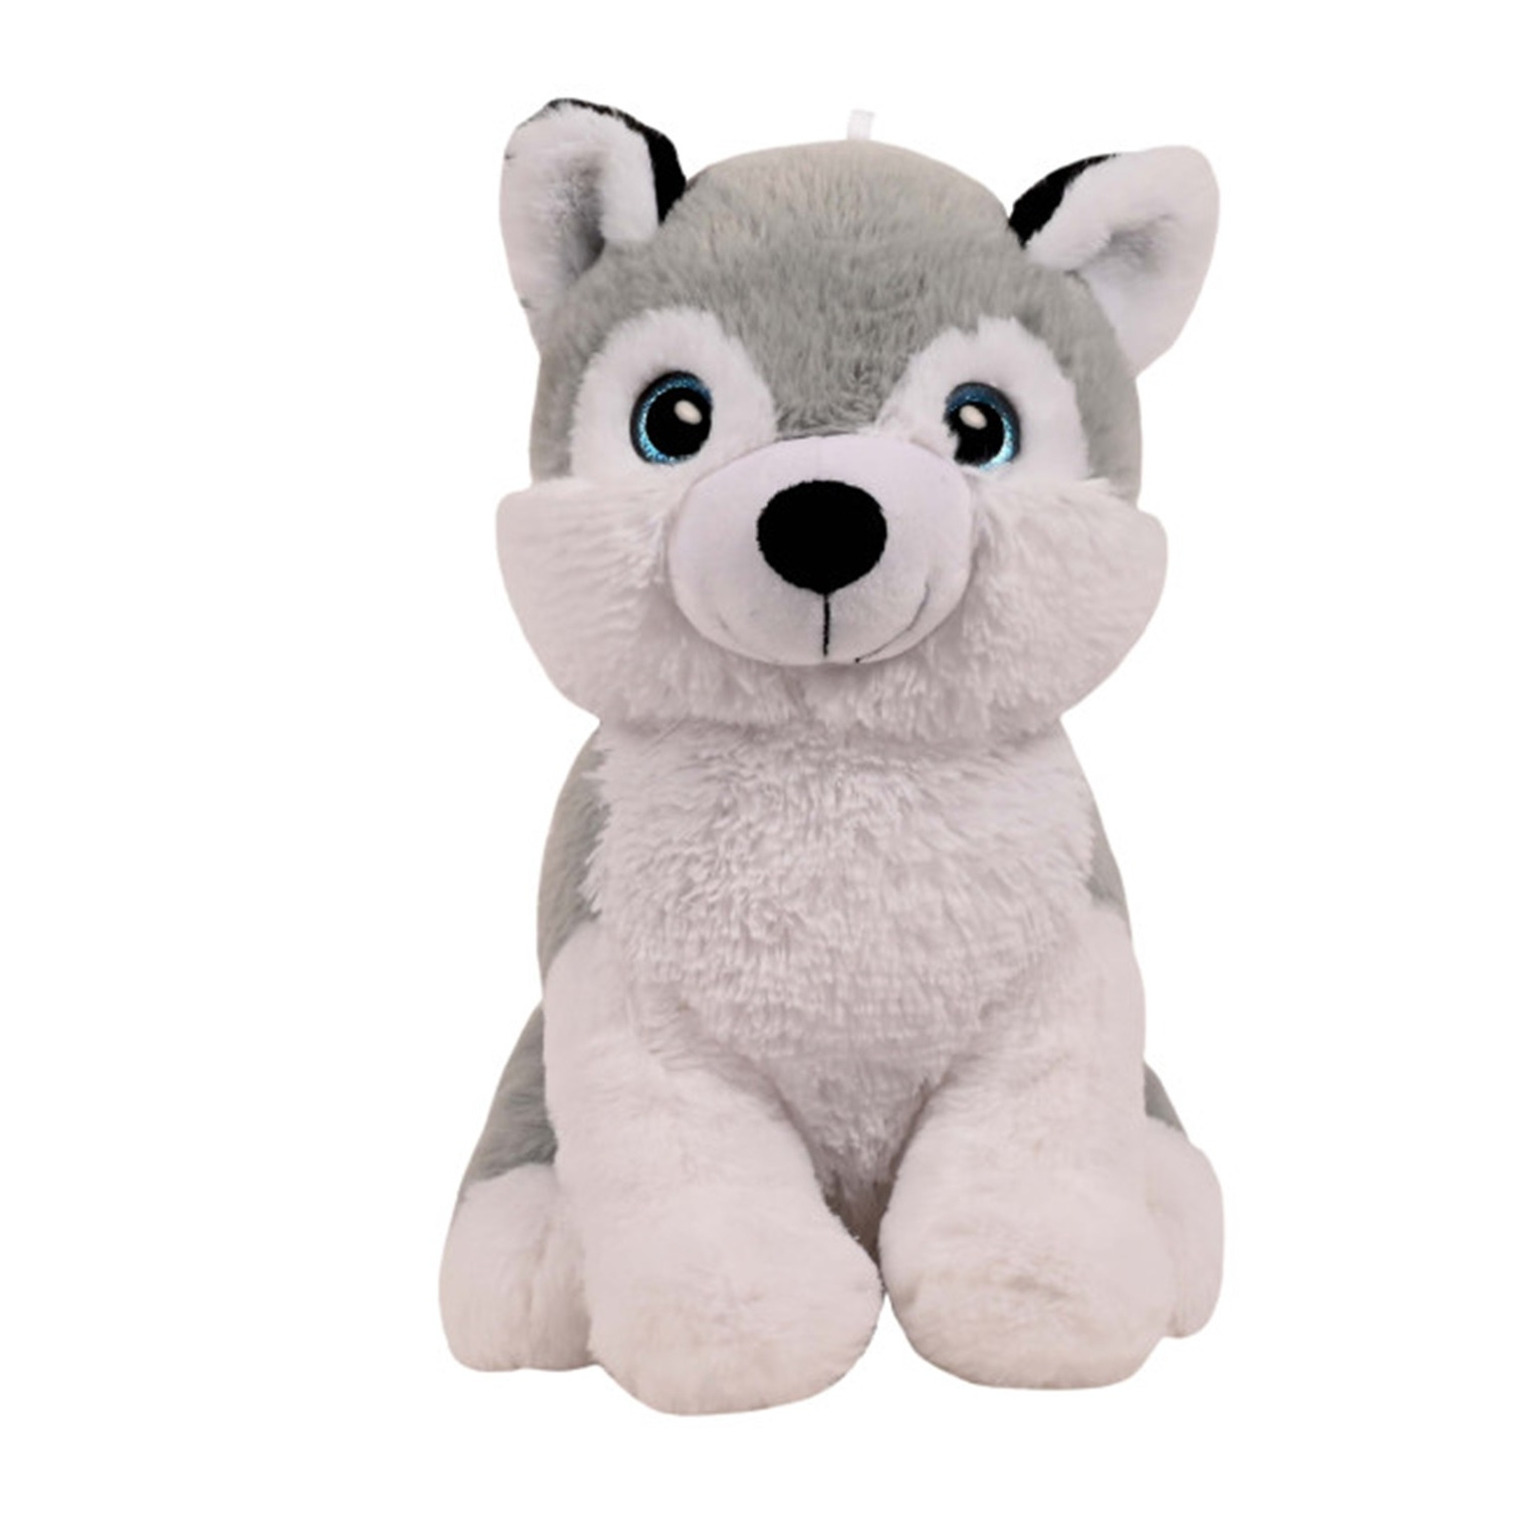 Knuffeldier Husky hond Billy zachte pluche stof dieren knuffels grijs-wit 32 cm